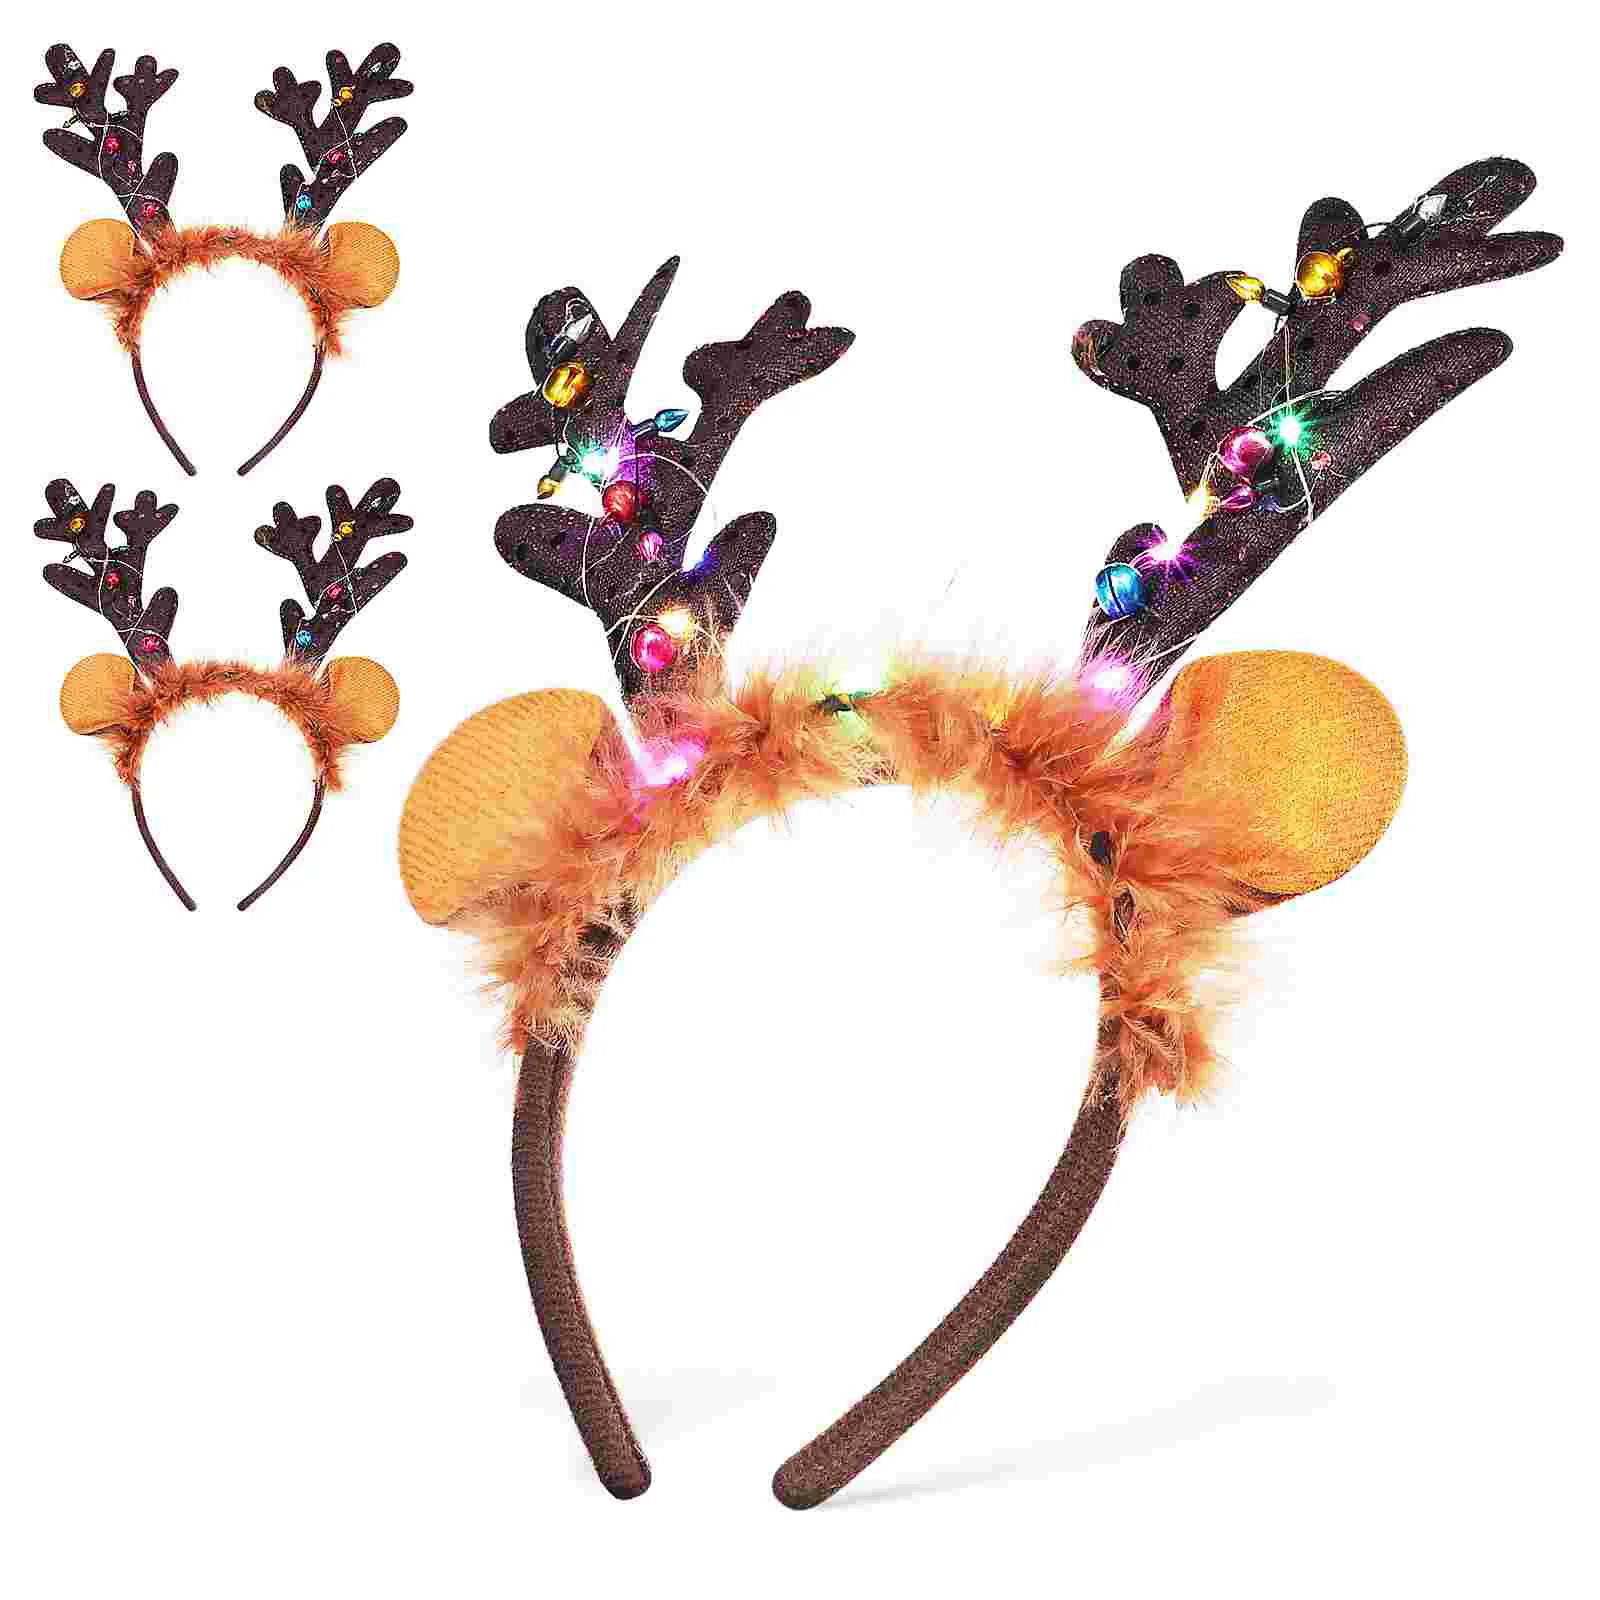 

3 Pcs Antler Headband Bands Reindeer Antlers Hair Ties Christmas Headbands Women Accessories